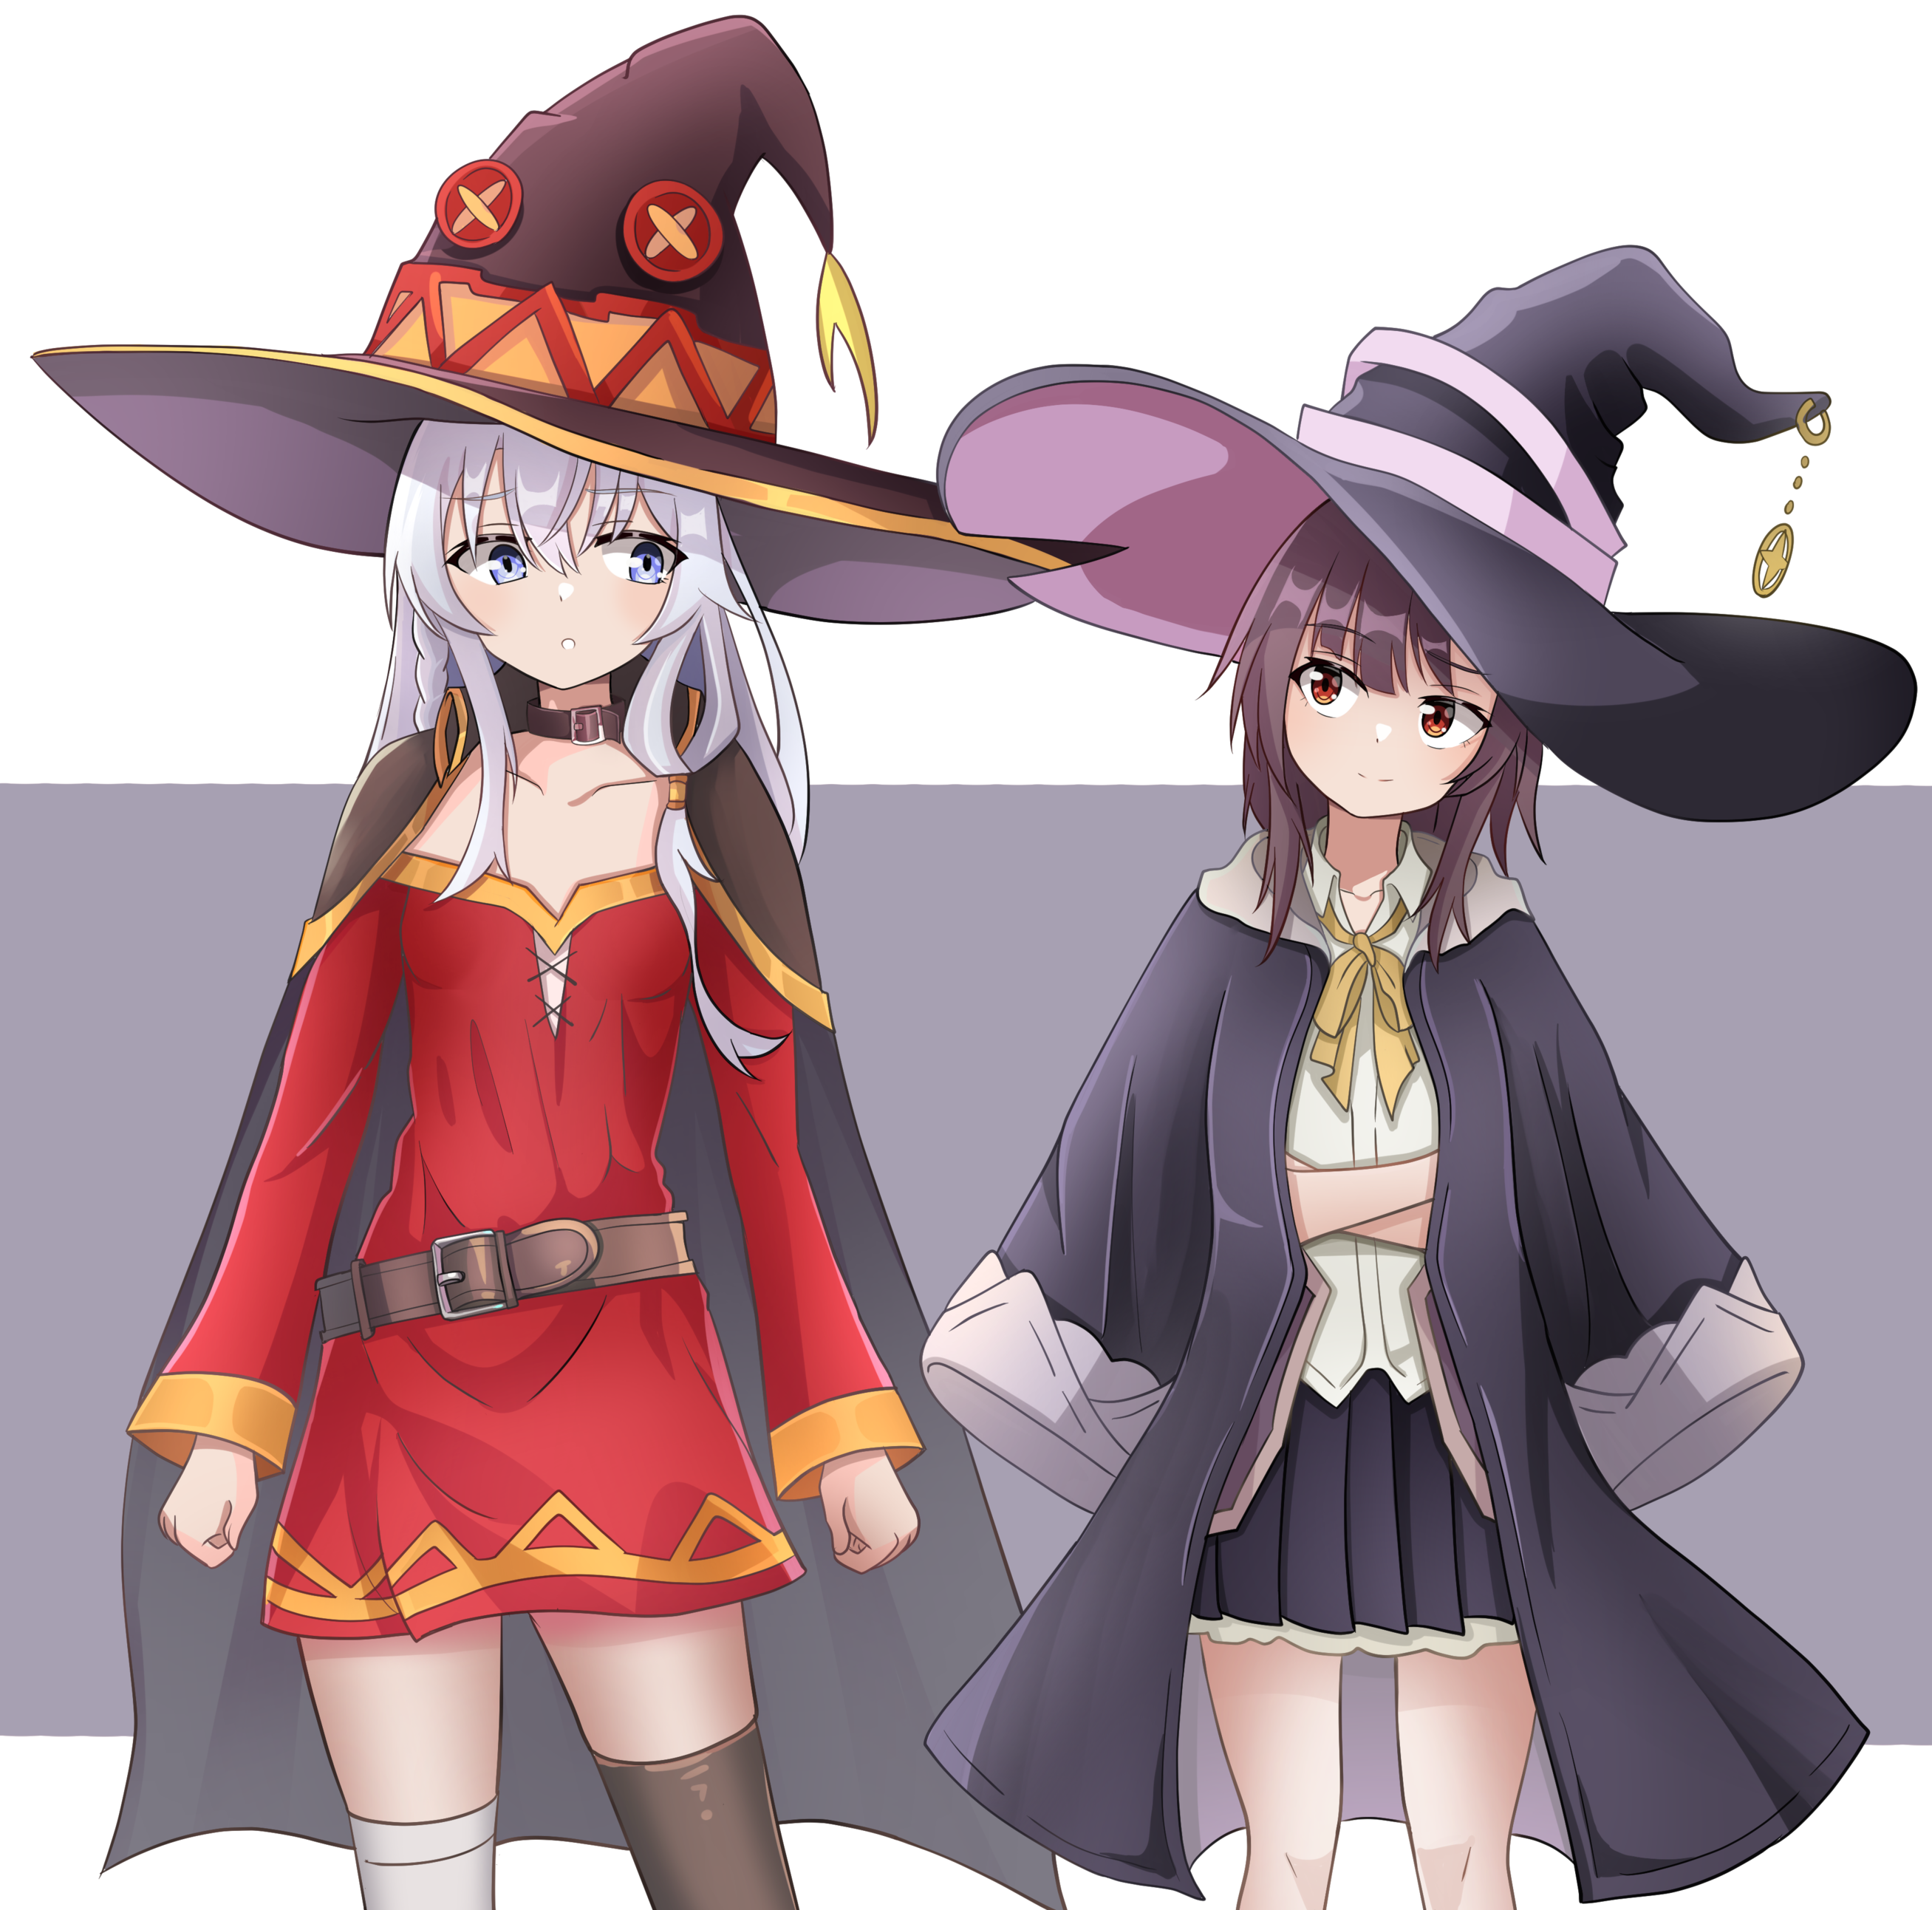 Elaina and Megumin outfit swap